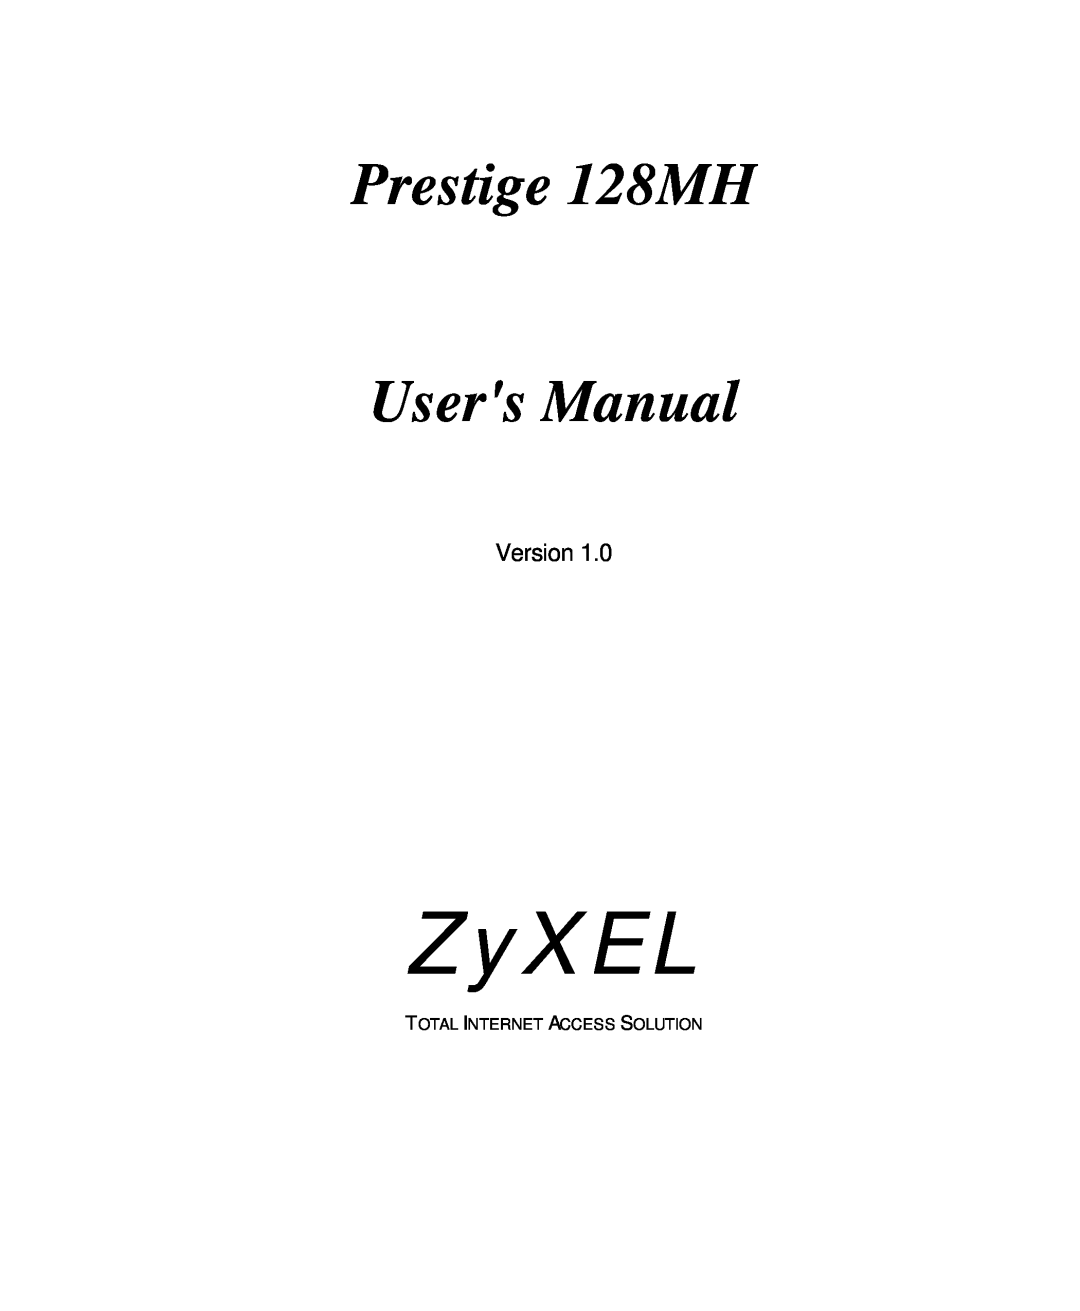 ZyXEL Communications user manual ZyXEL, Prestige 128MH, Users Manual, Version 